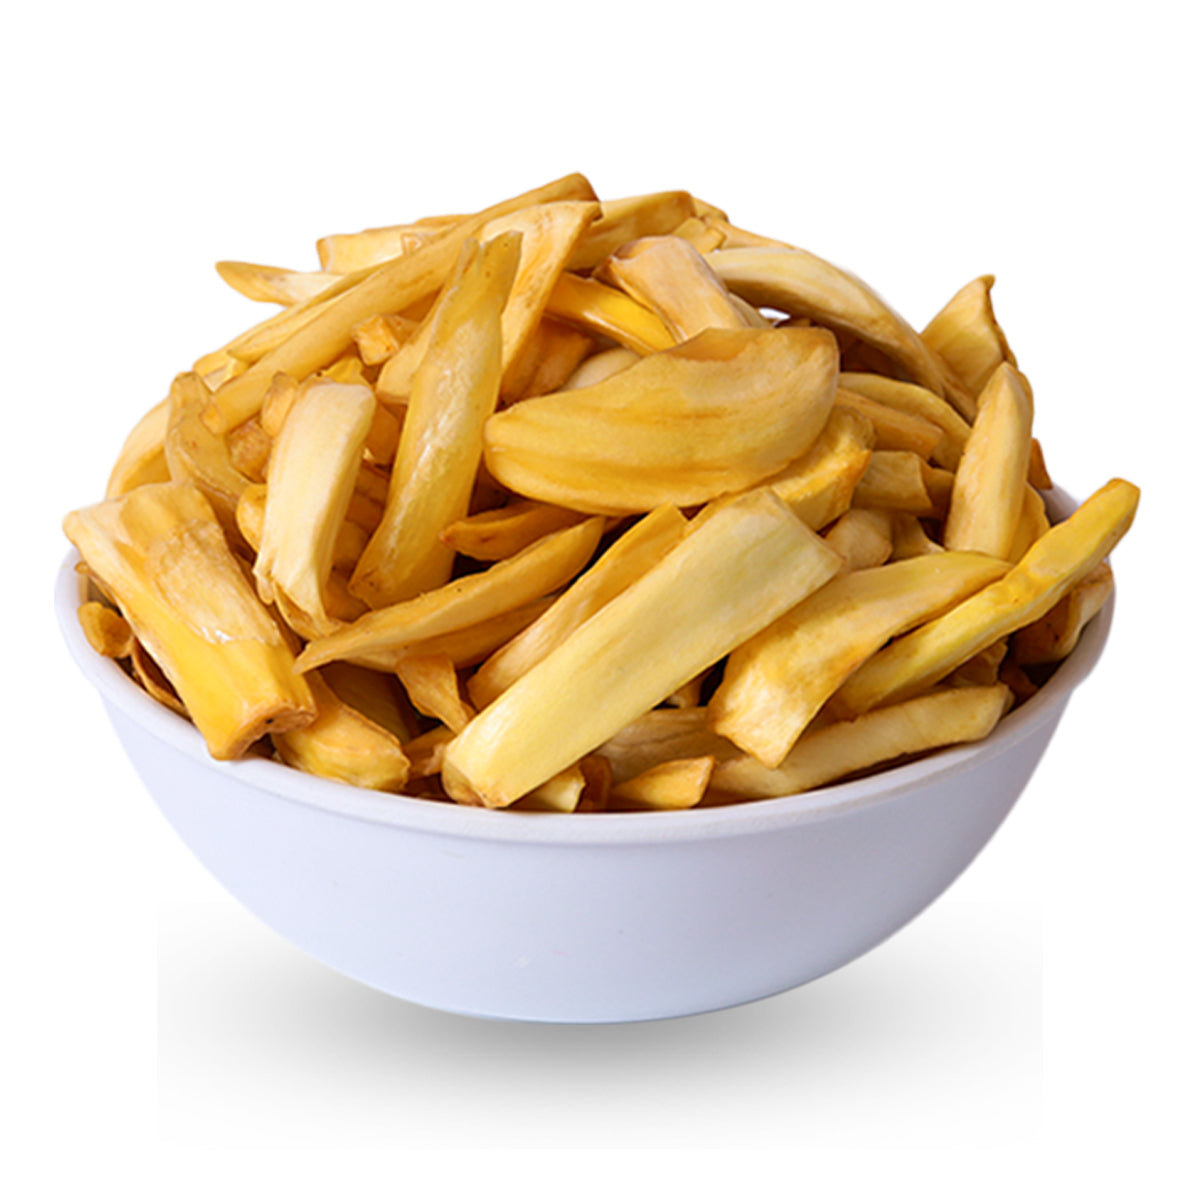 Kerala Chips Combo - Jackfruit Chips (500g) & Tapioca Chips (500g) - 1kg